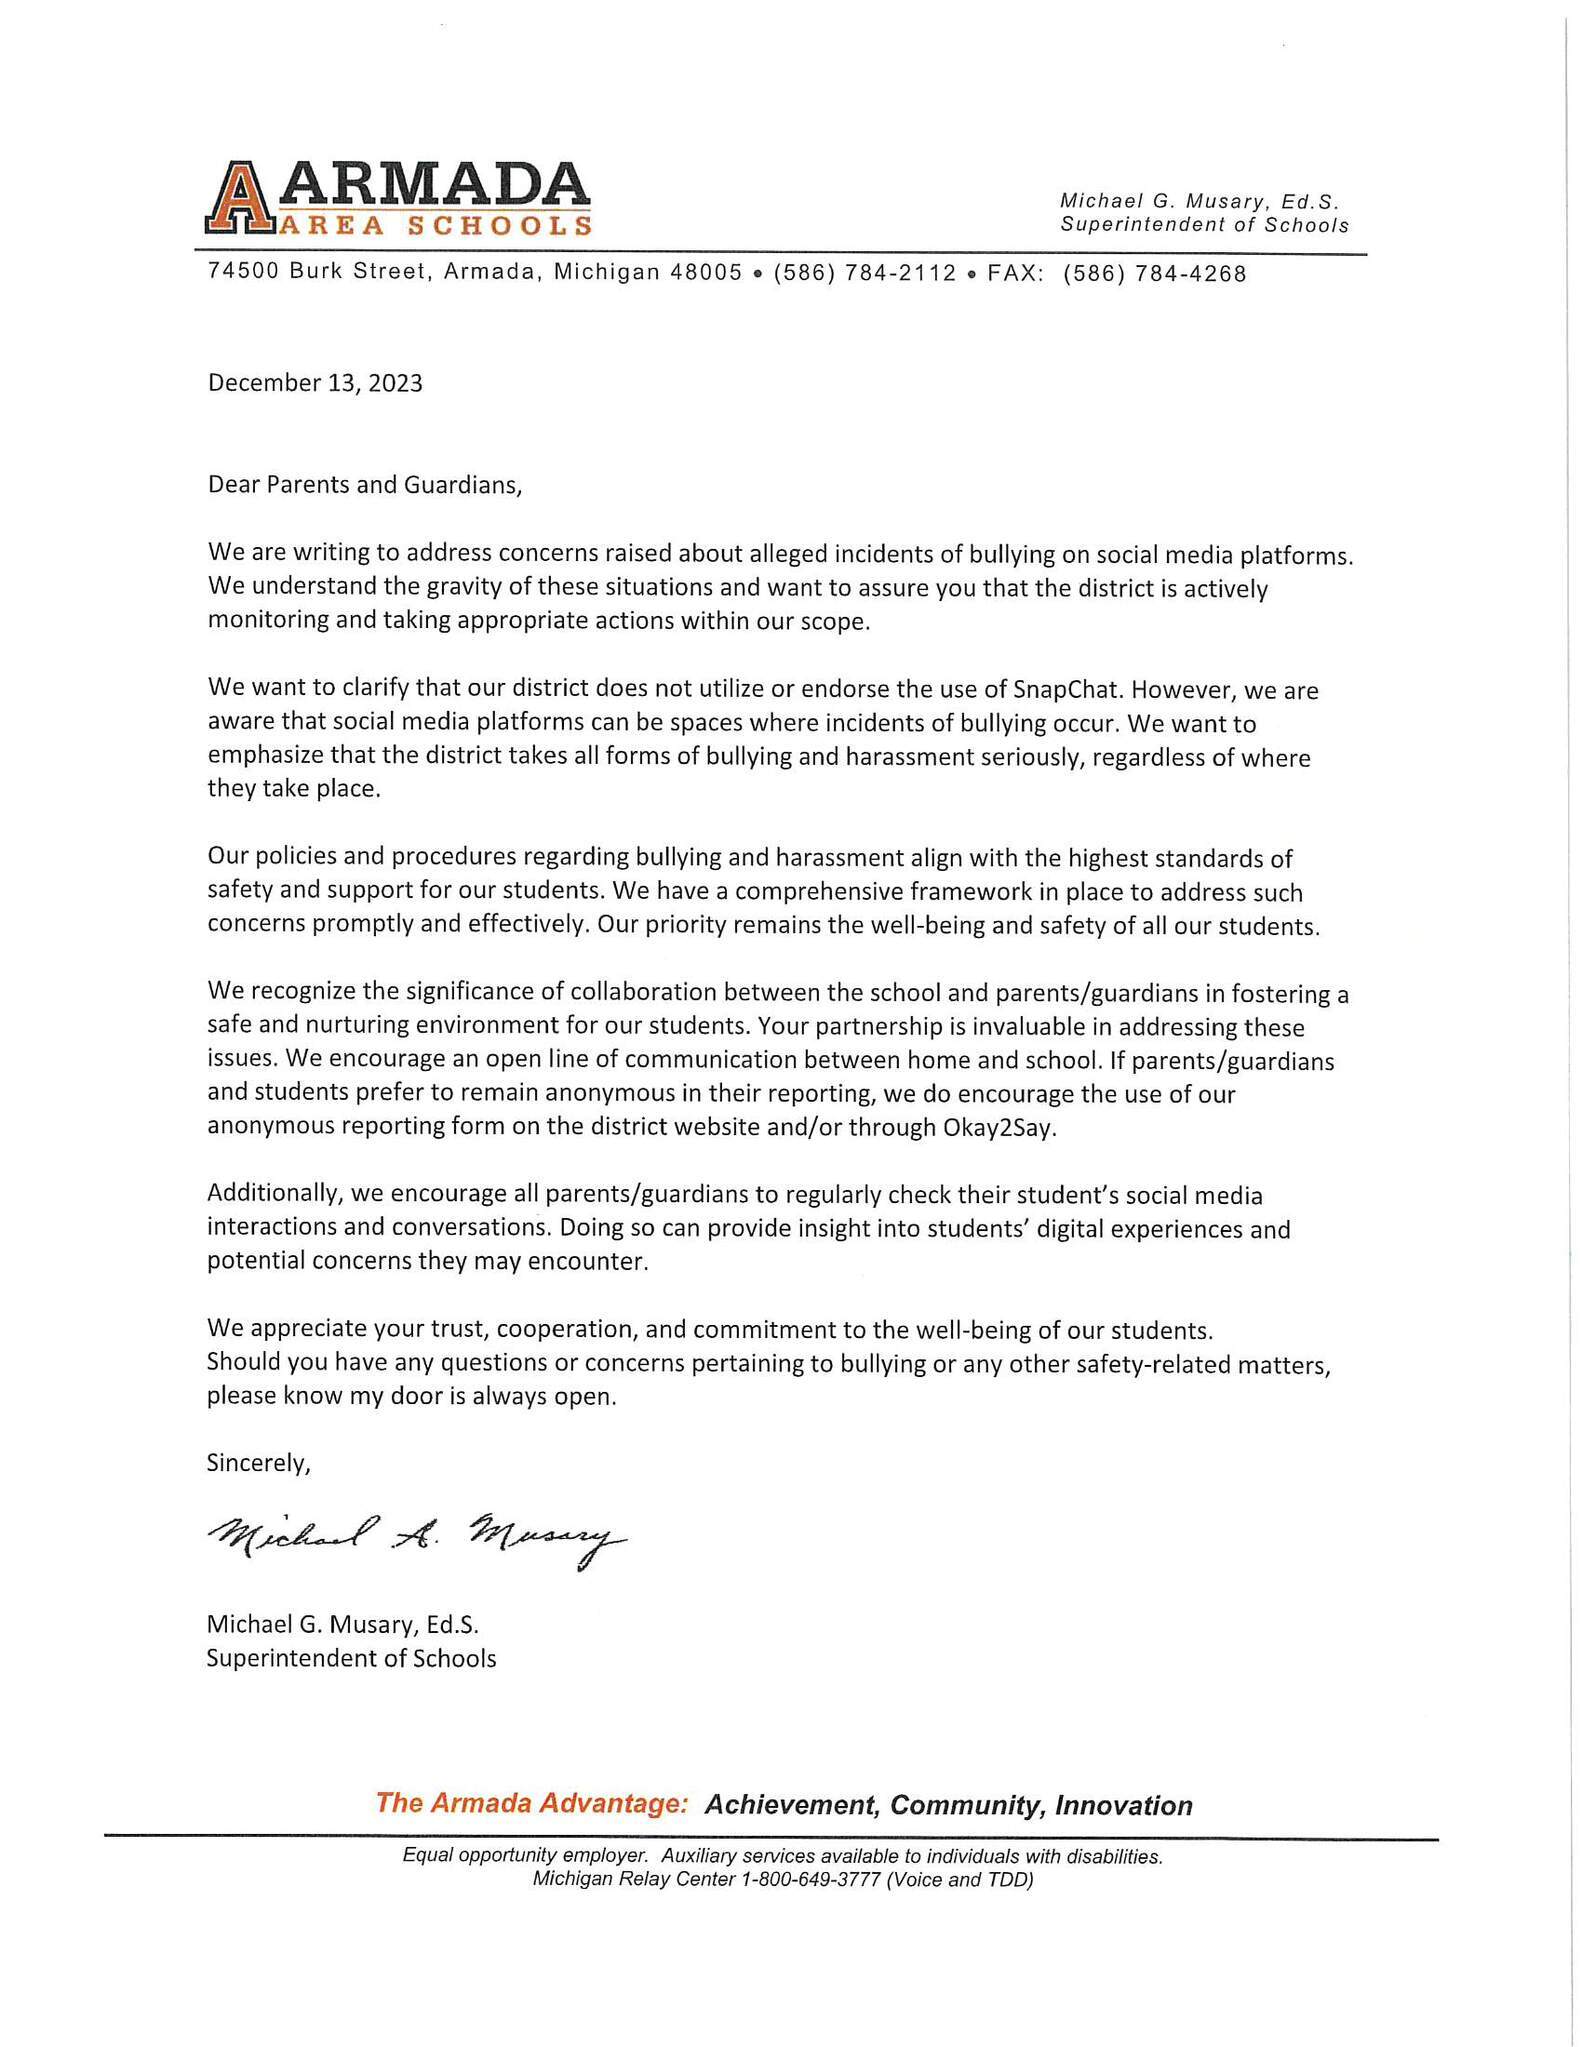 Letter regarding social media from Superintendent